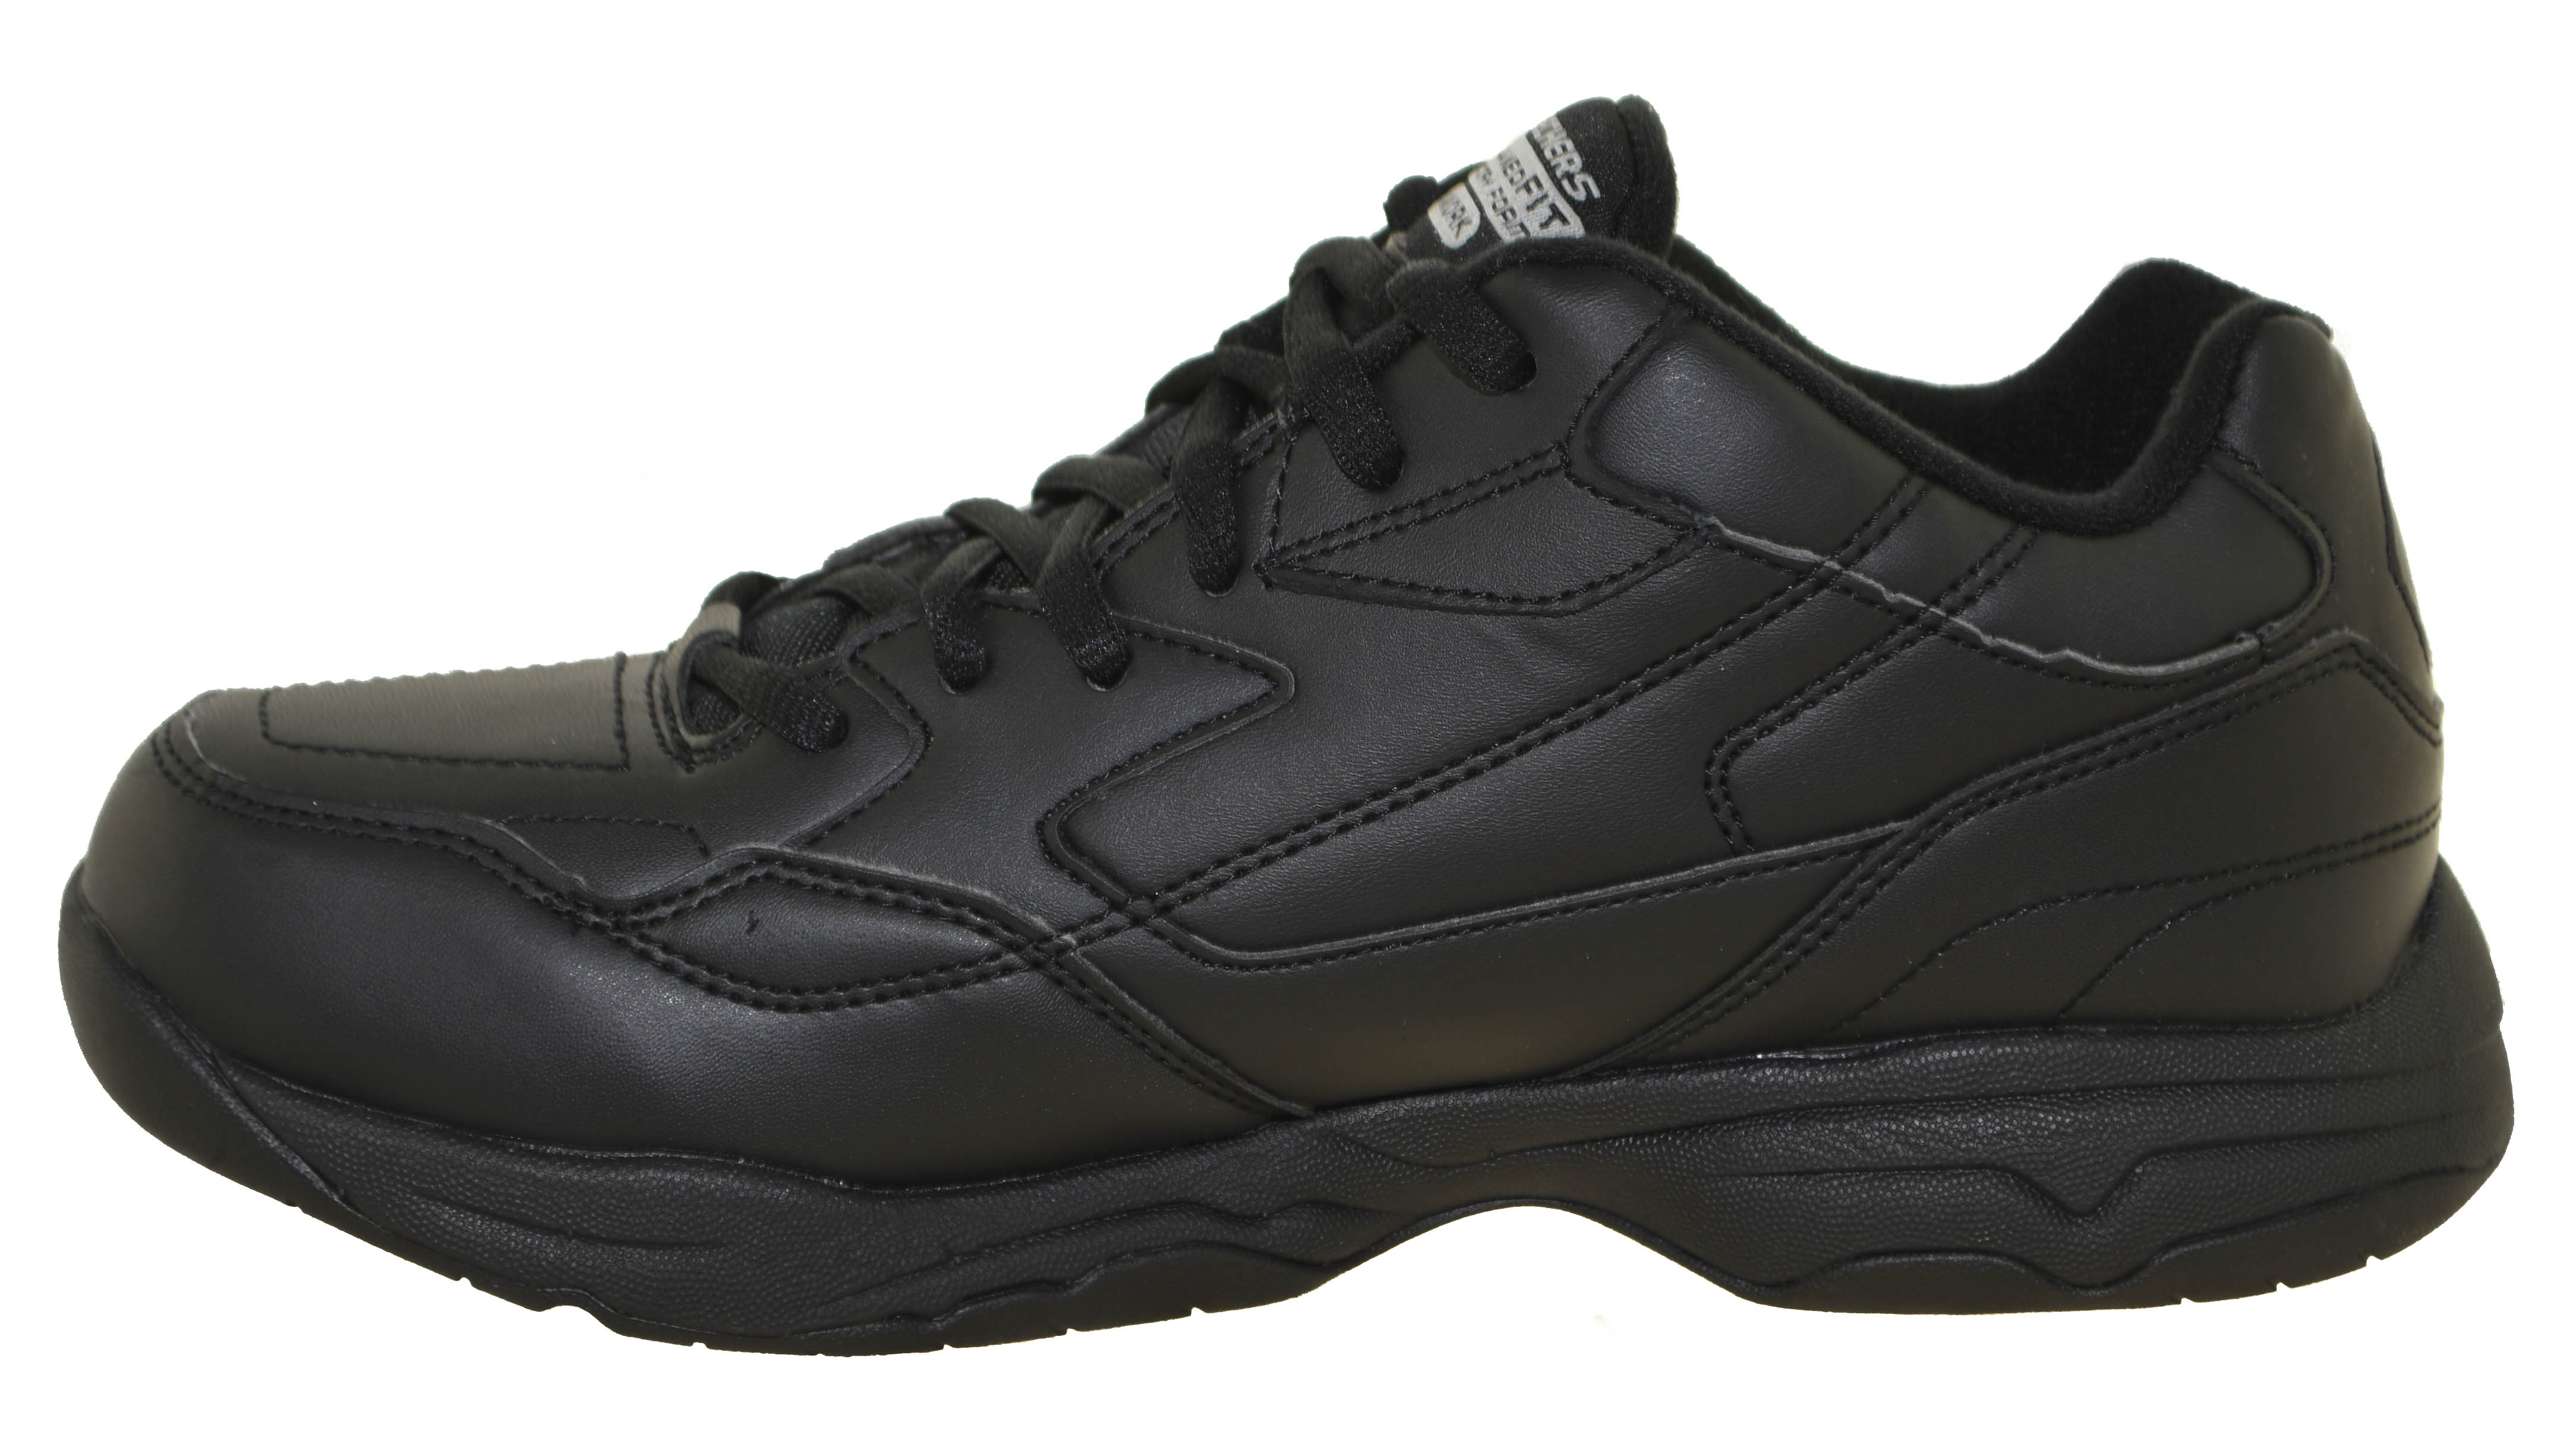 Skechers Men's Felton Slip-Resistant Work Sneaker Style 77032 BLK | eBay